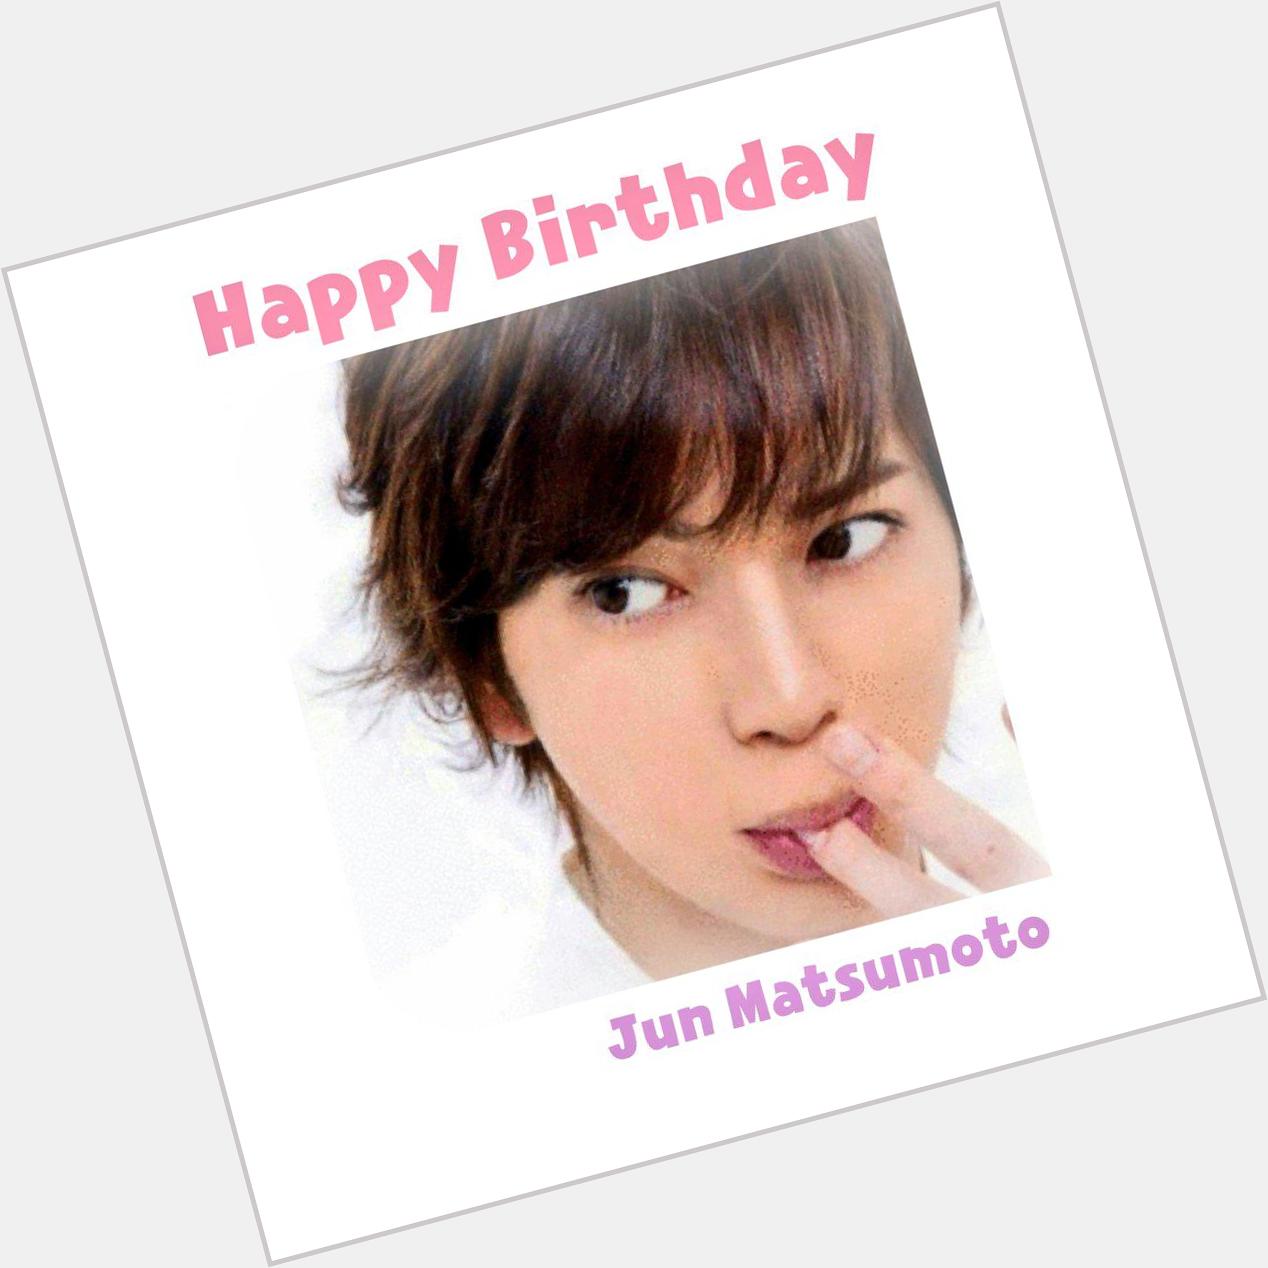  Jun Matsumoto 32th Happy Birthday                                  1             